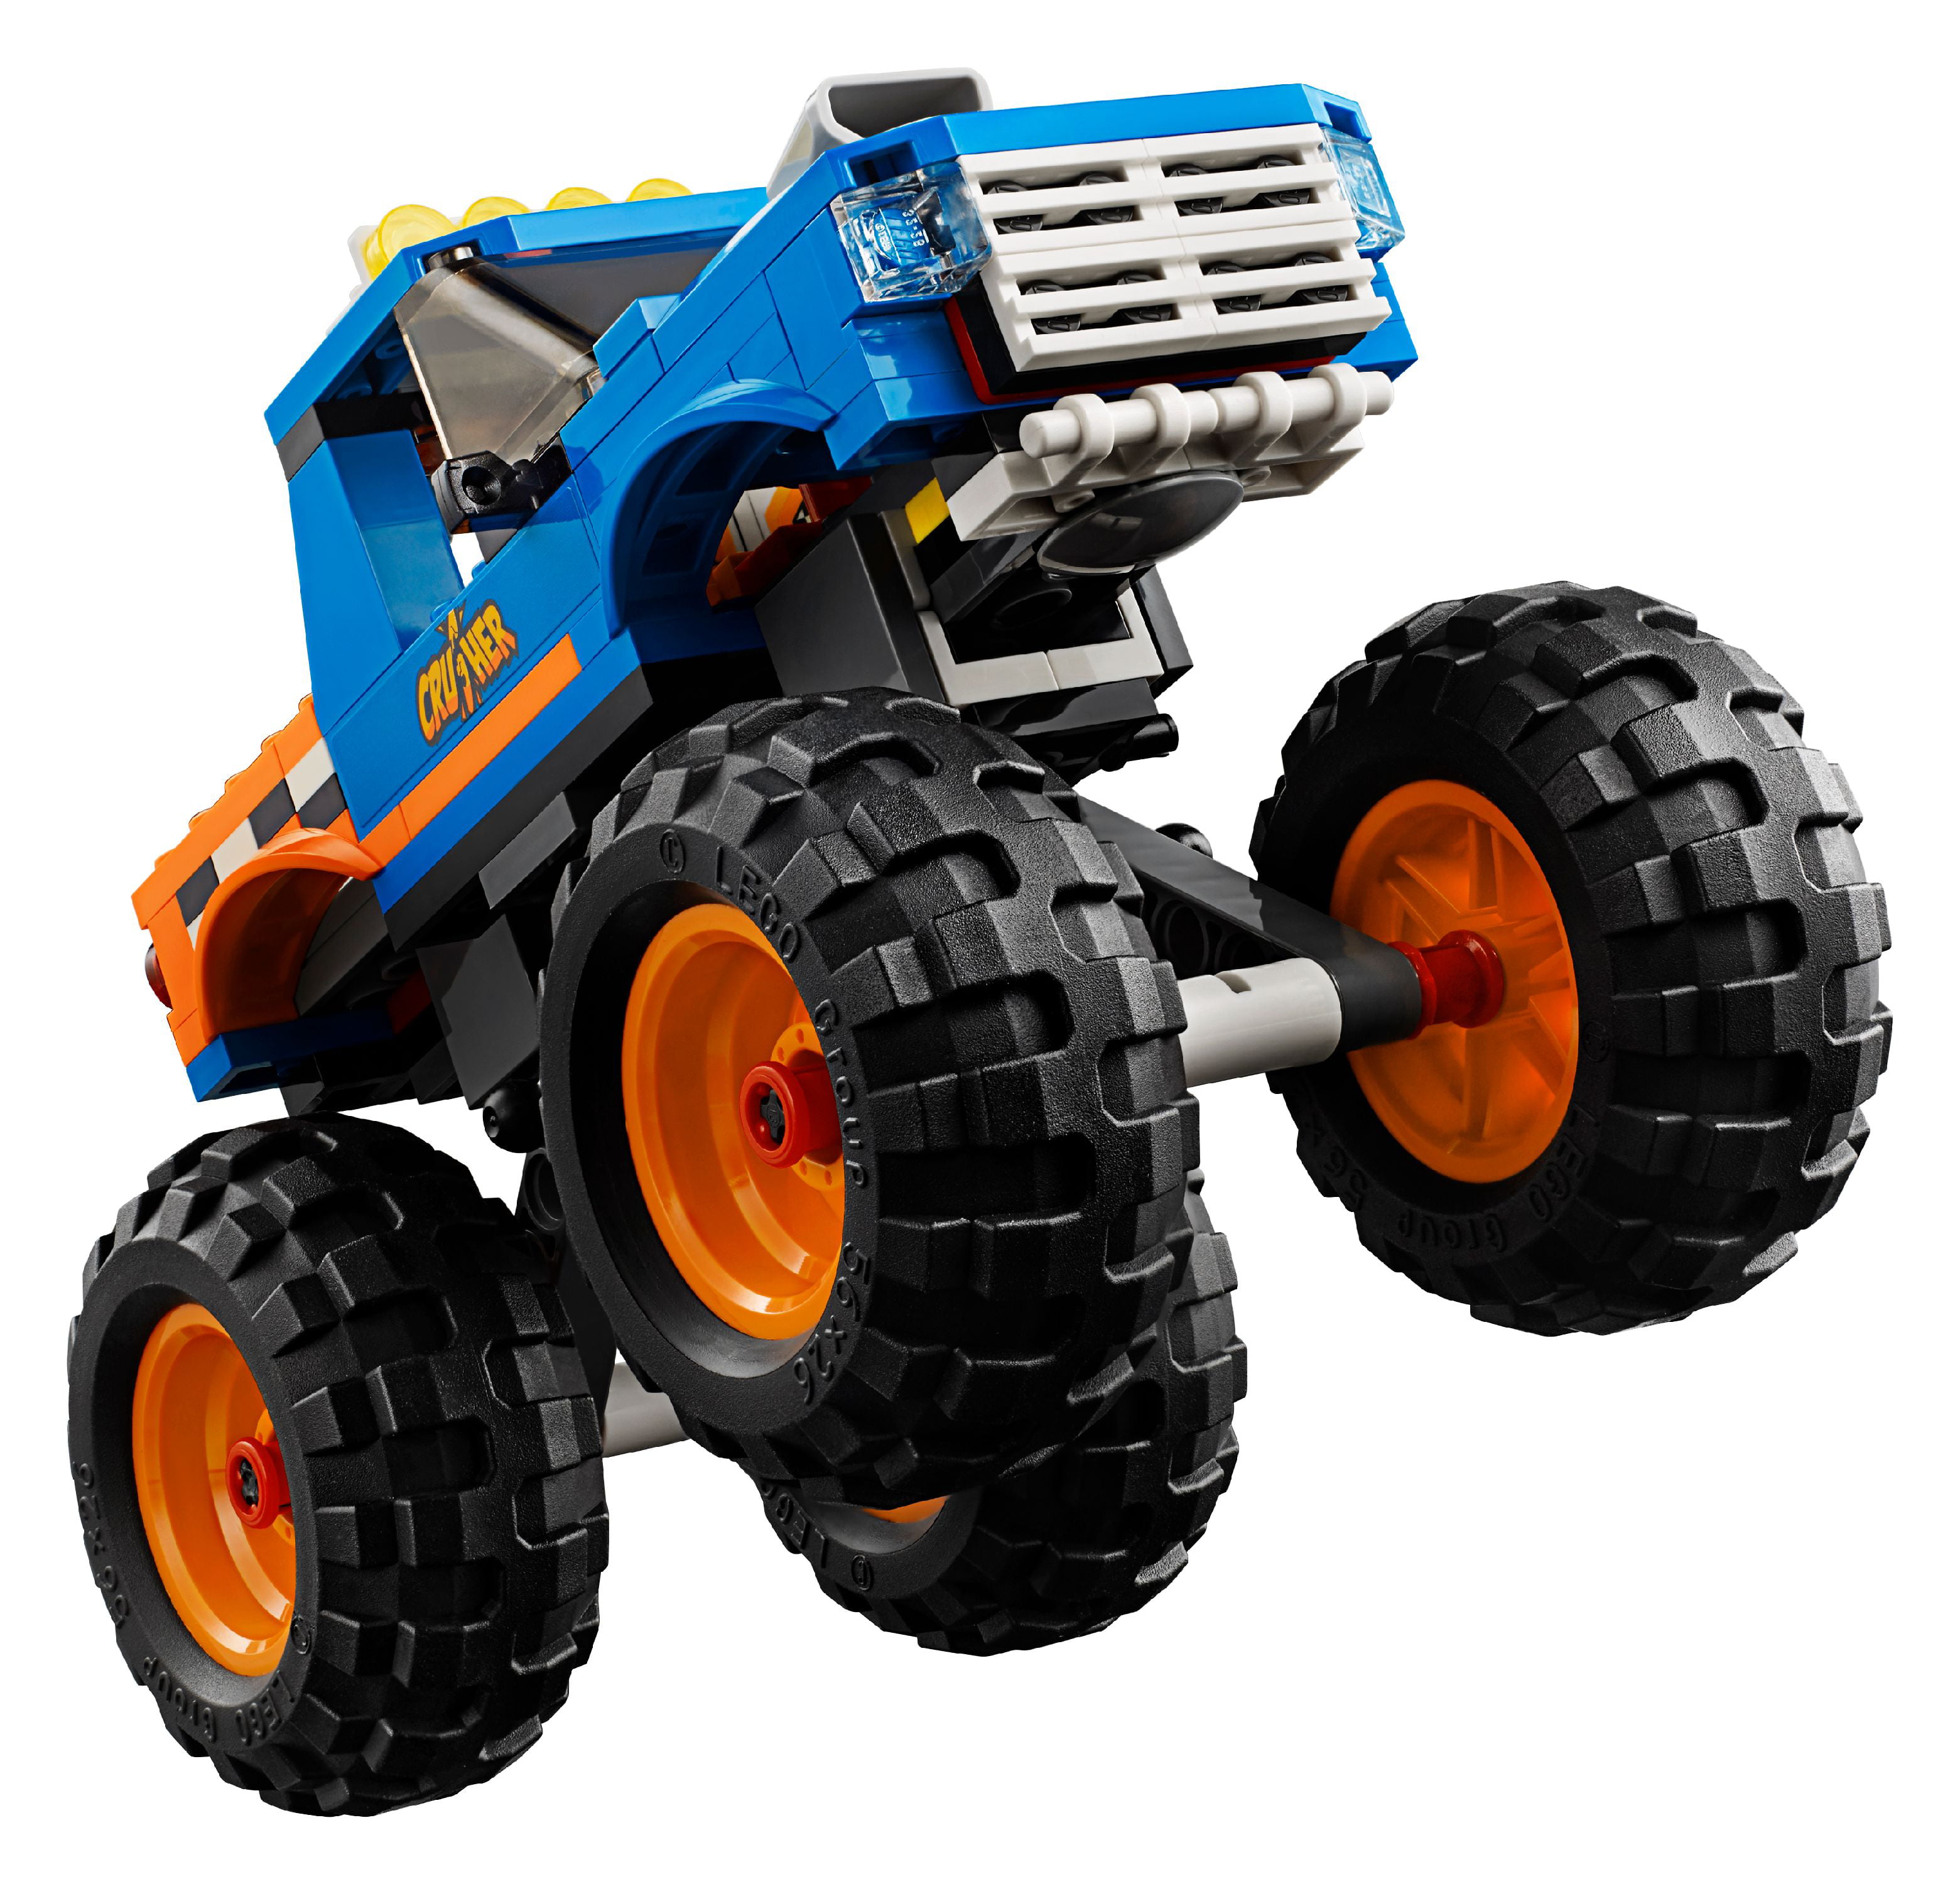 LEGO Great Vehicles Monster Truck - Walmart.com